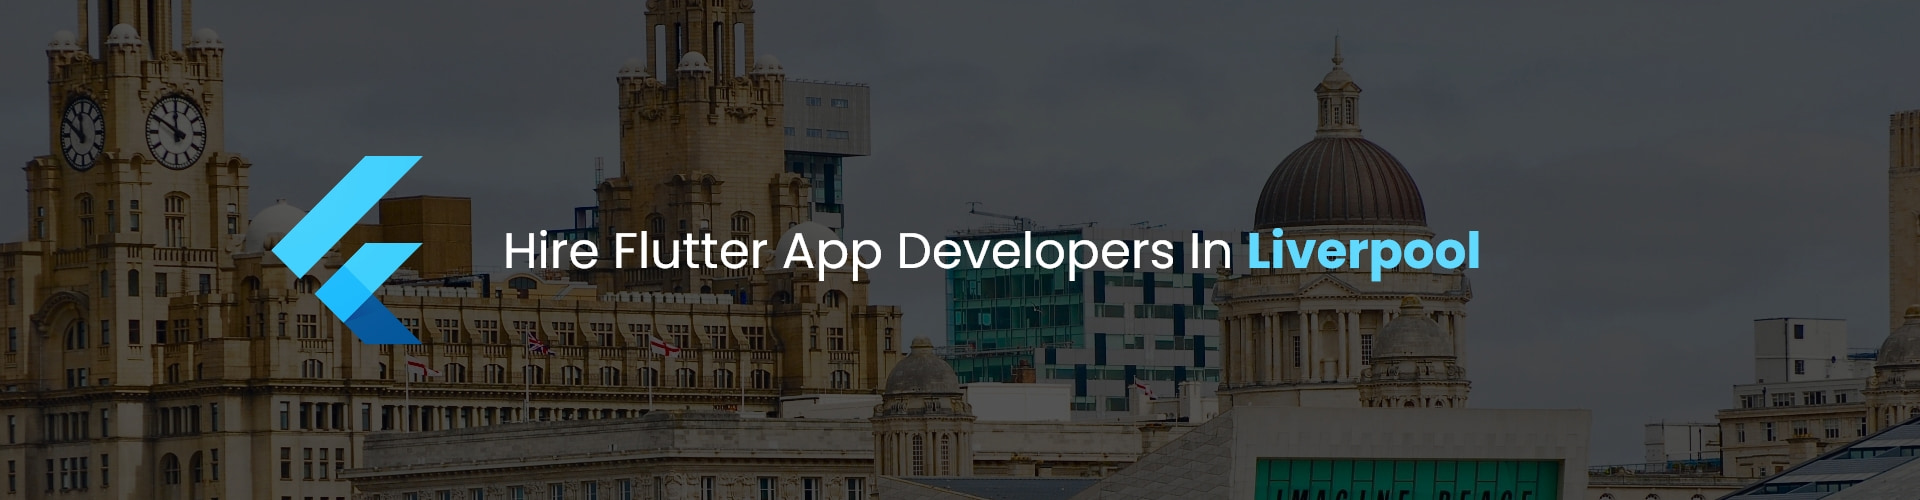 hire flutter app developers in liverpool